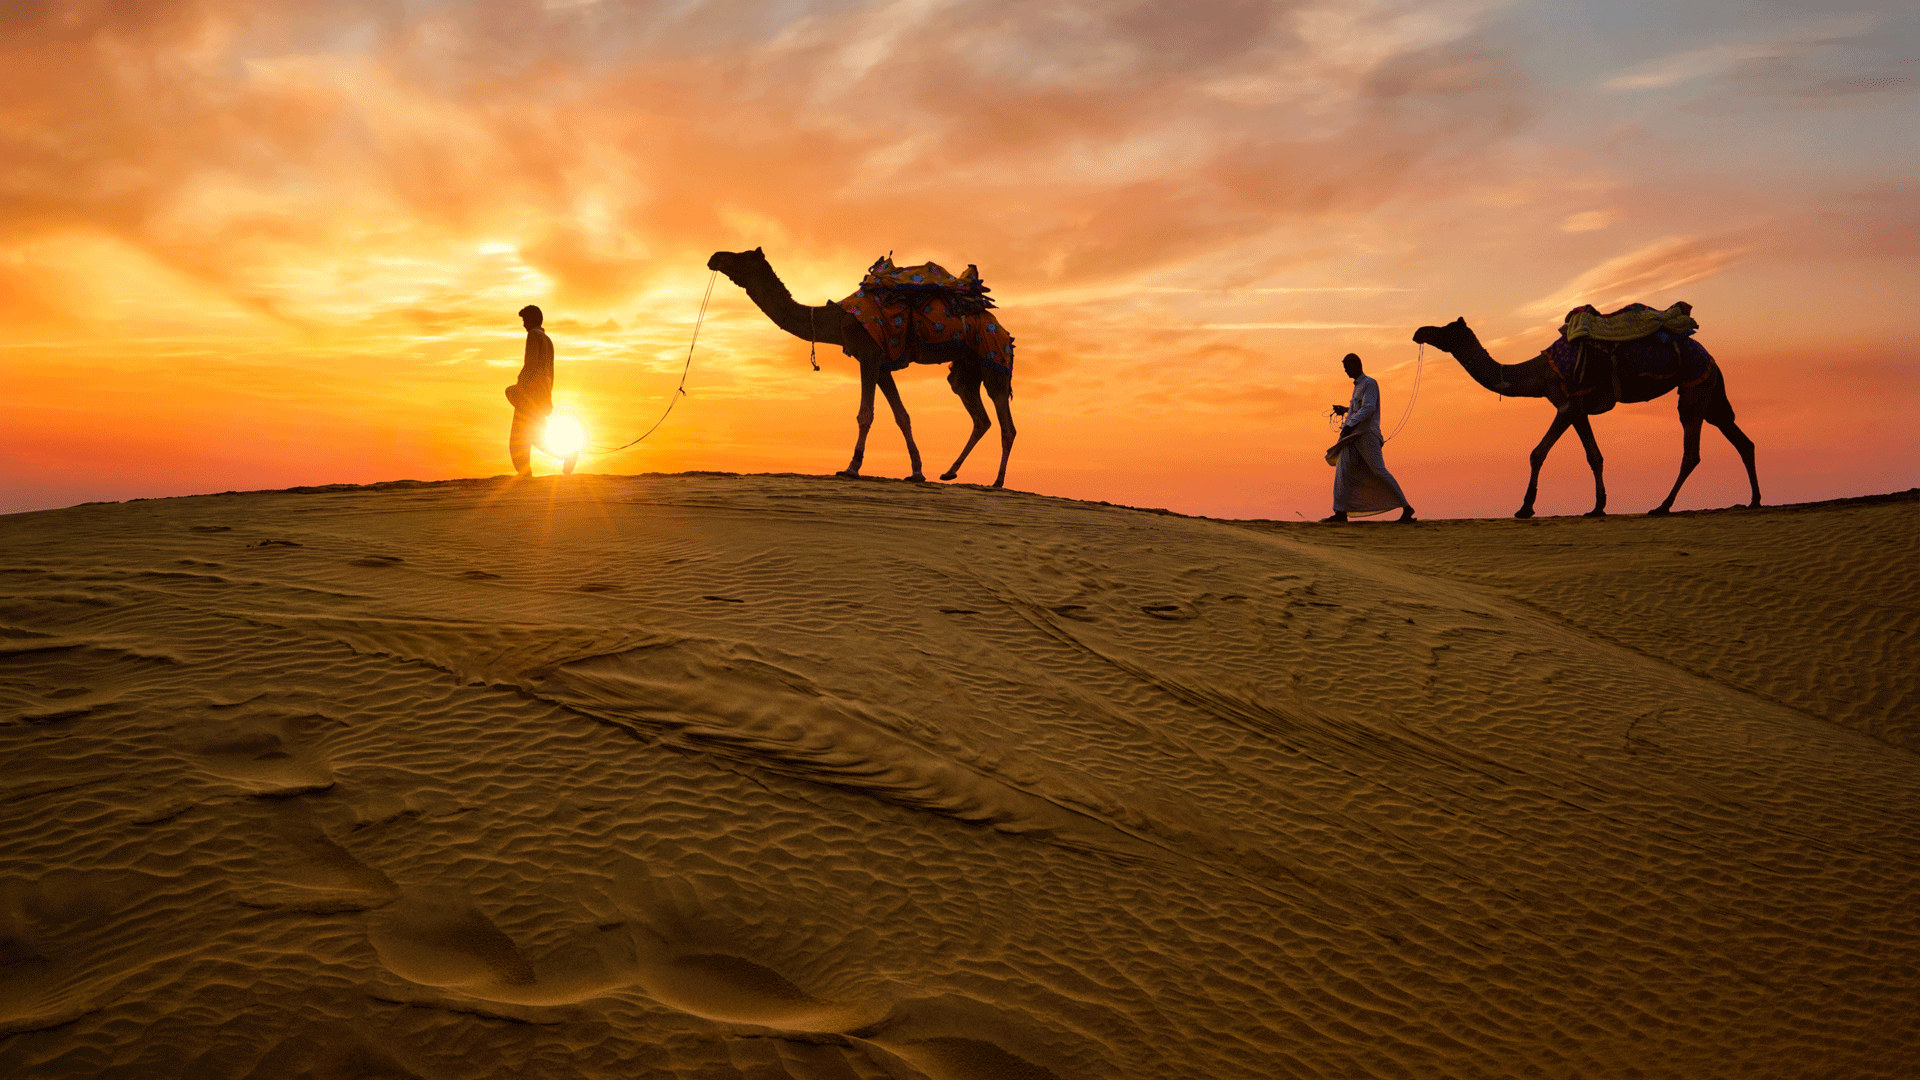 1658583032_532728-rajasthan-camels-desert-india.gif